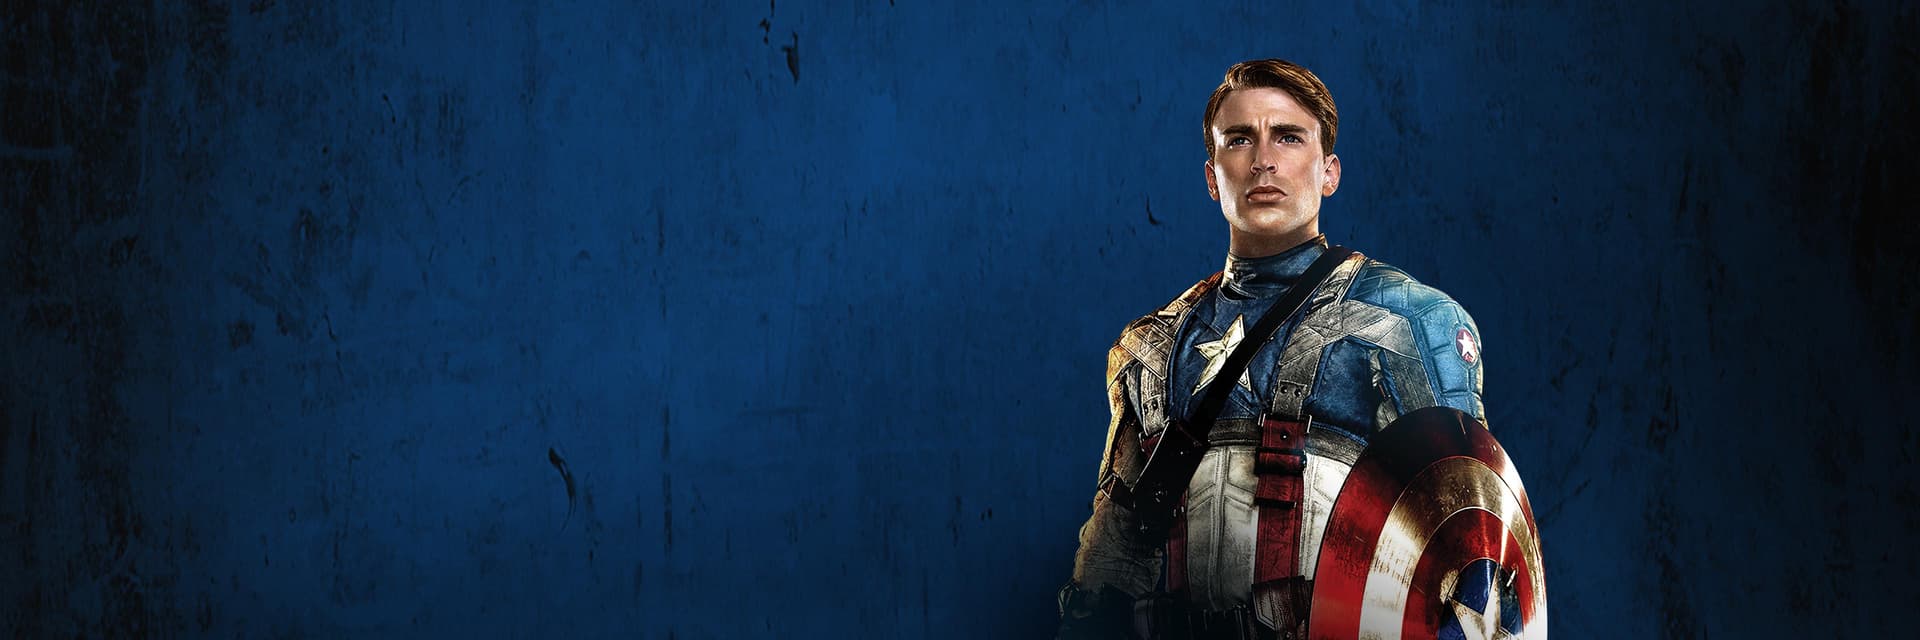 Captain America Movie Collection